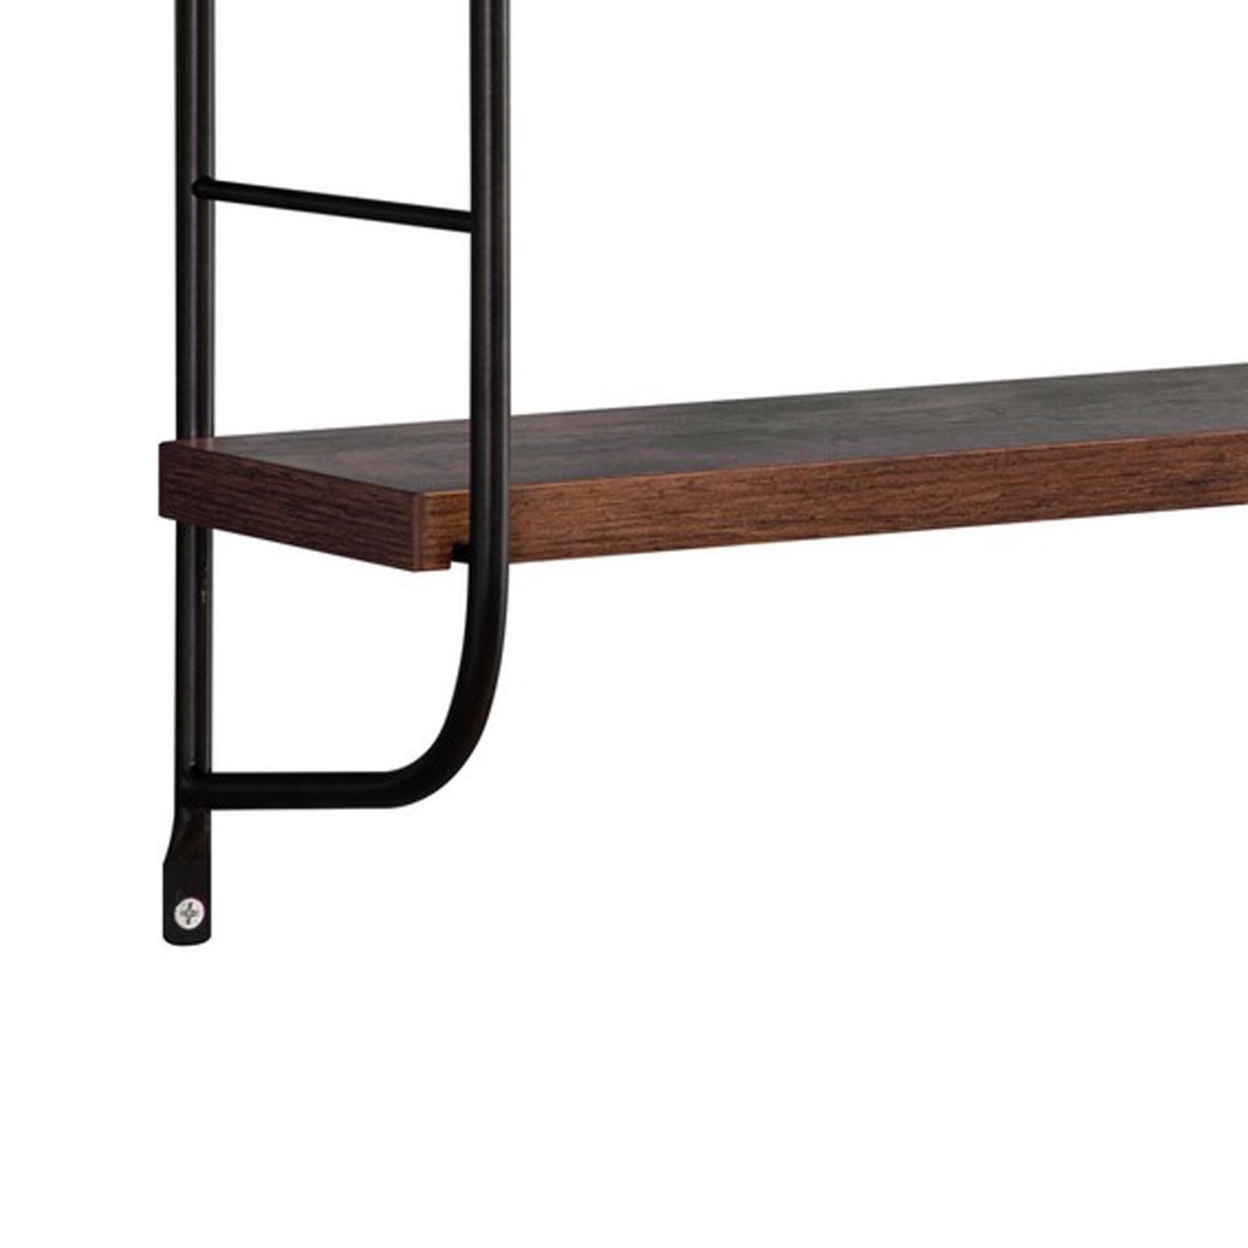 Cox 47 Inch Two Tier Wall Mounted Metal Shelf, 5 Adjustable Heights, Brown- Saltoro Sherpi